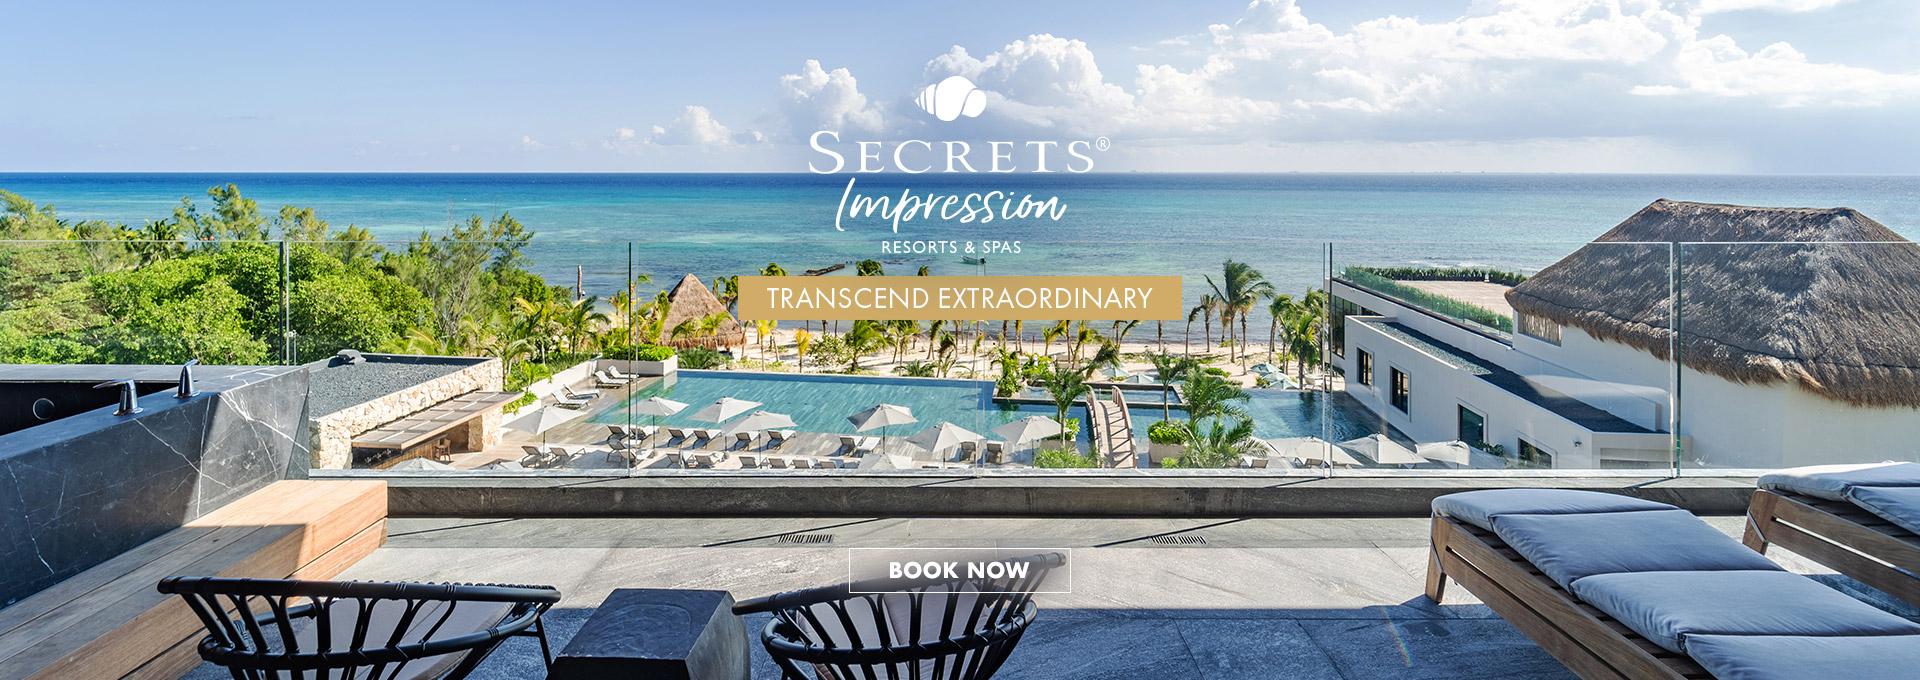 Secrets Impression Resorts & Spas